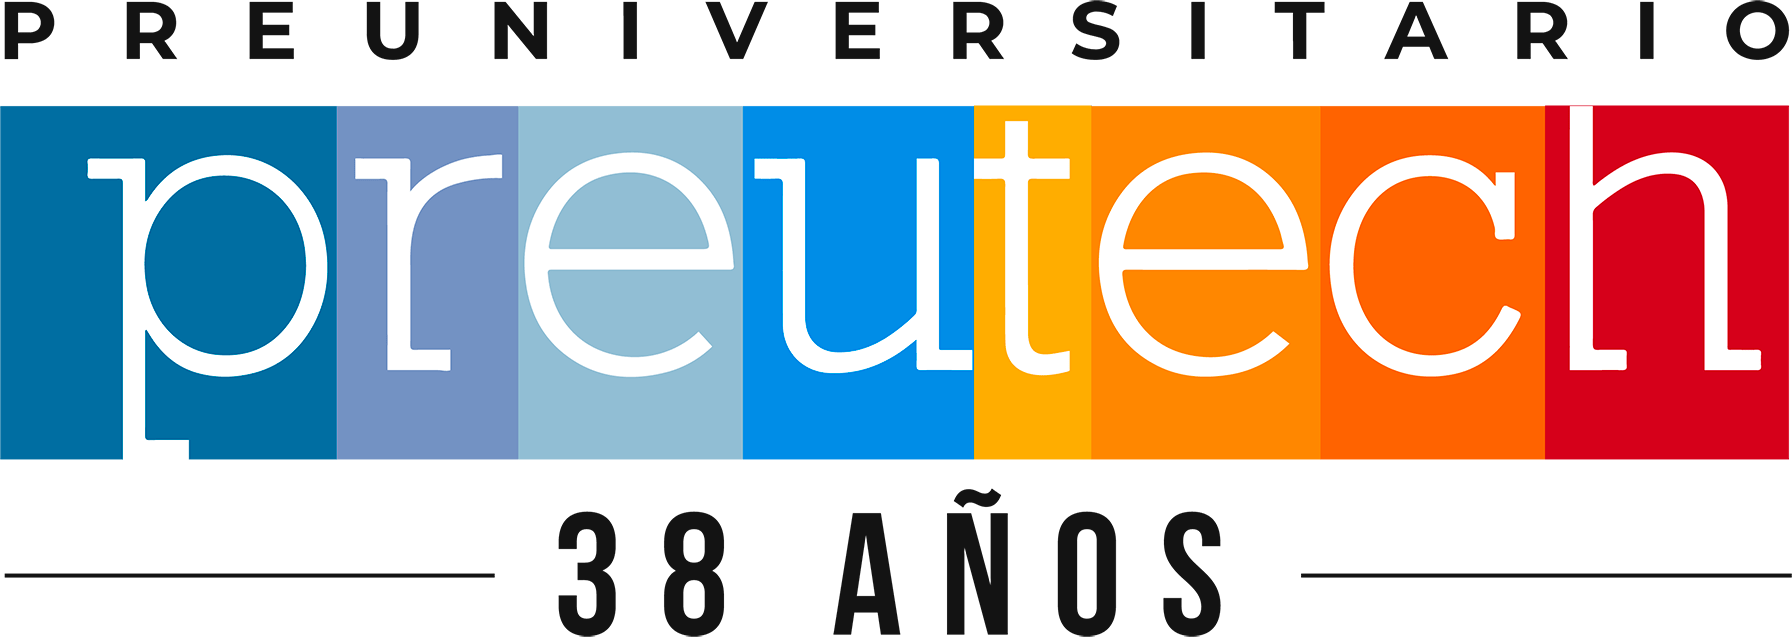 Preuniversitario Preutech - PSU 2020 – Matricula Gratis